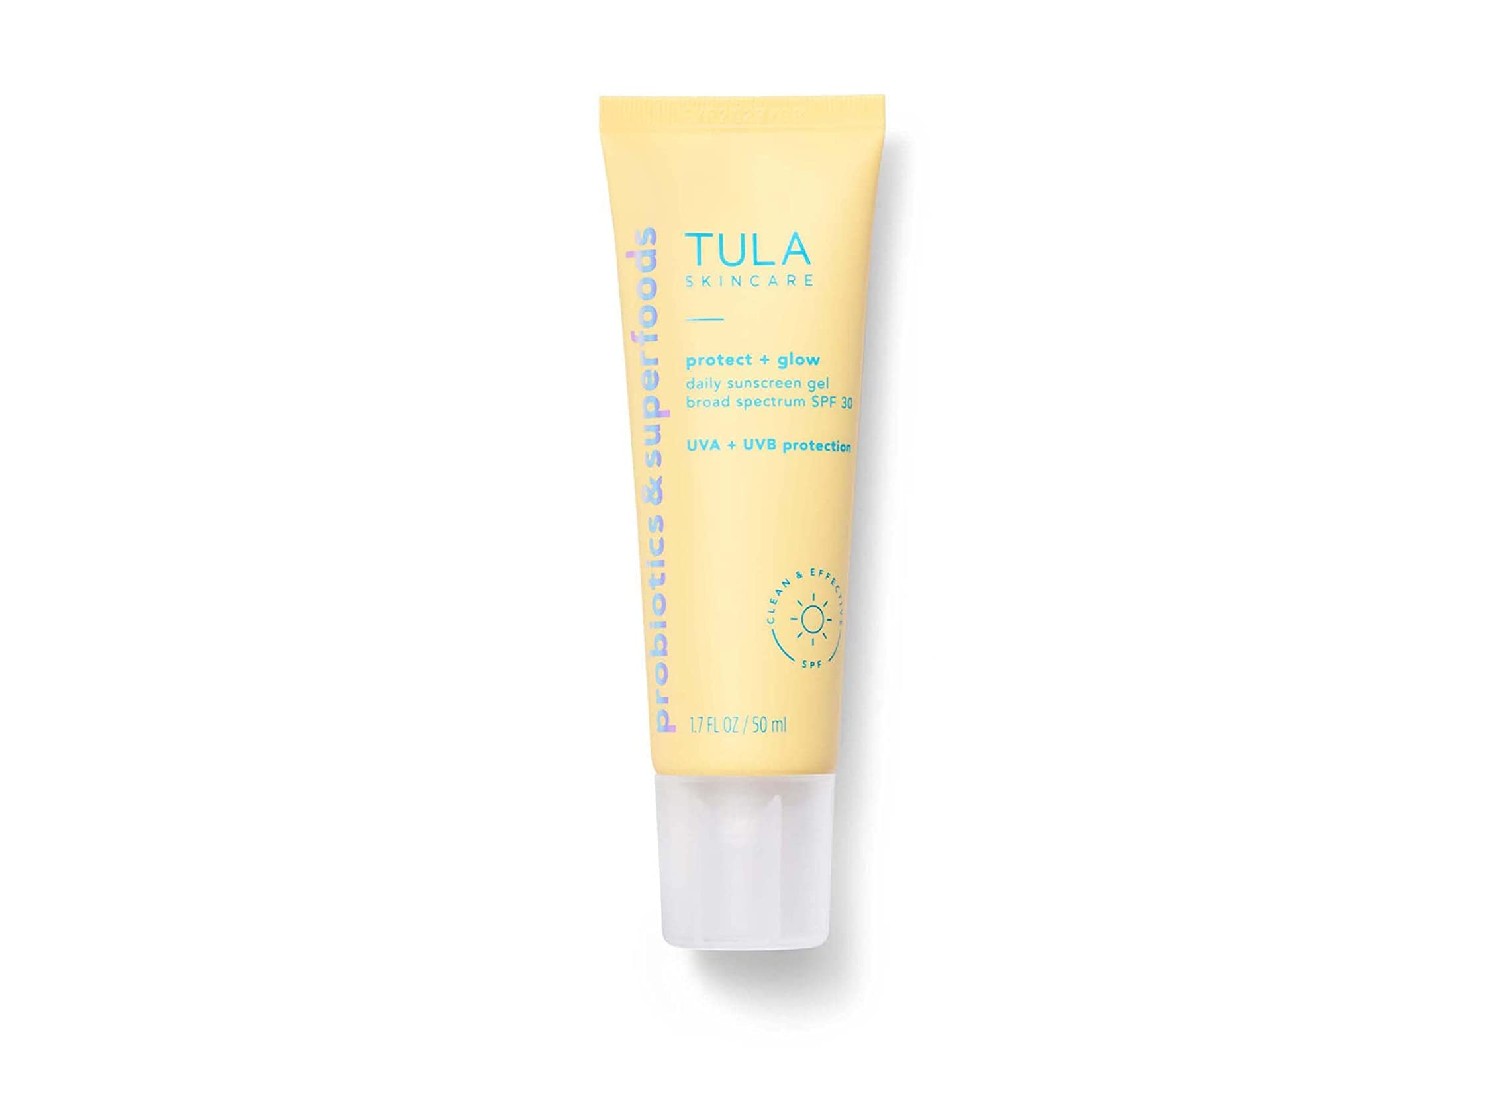 A bottle of TULA skincare gel